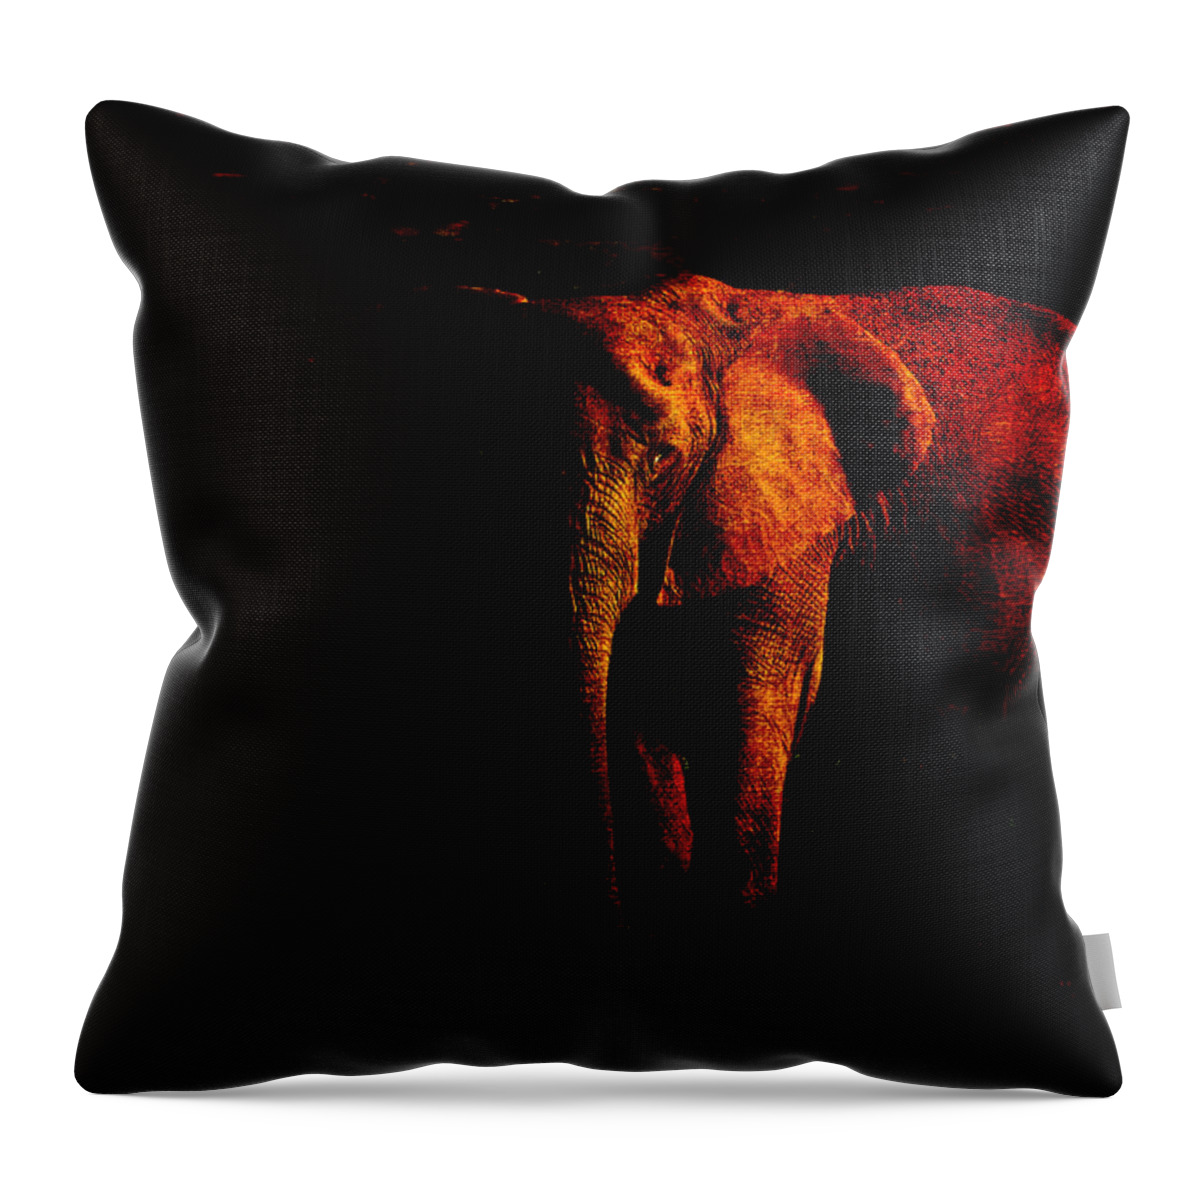 Elephant Throw Pillow featuring the digital art Save the Elephant by Sarah Vernon